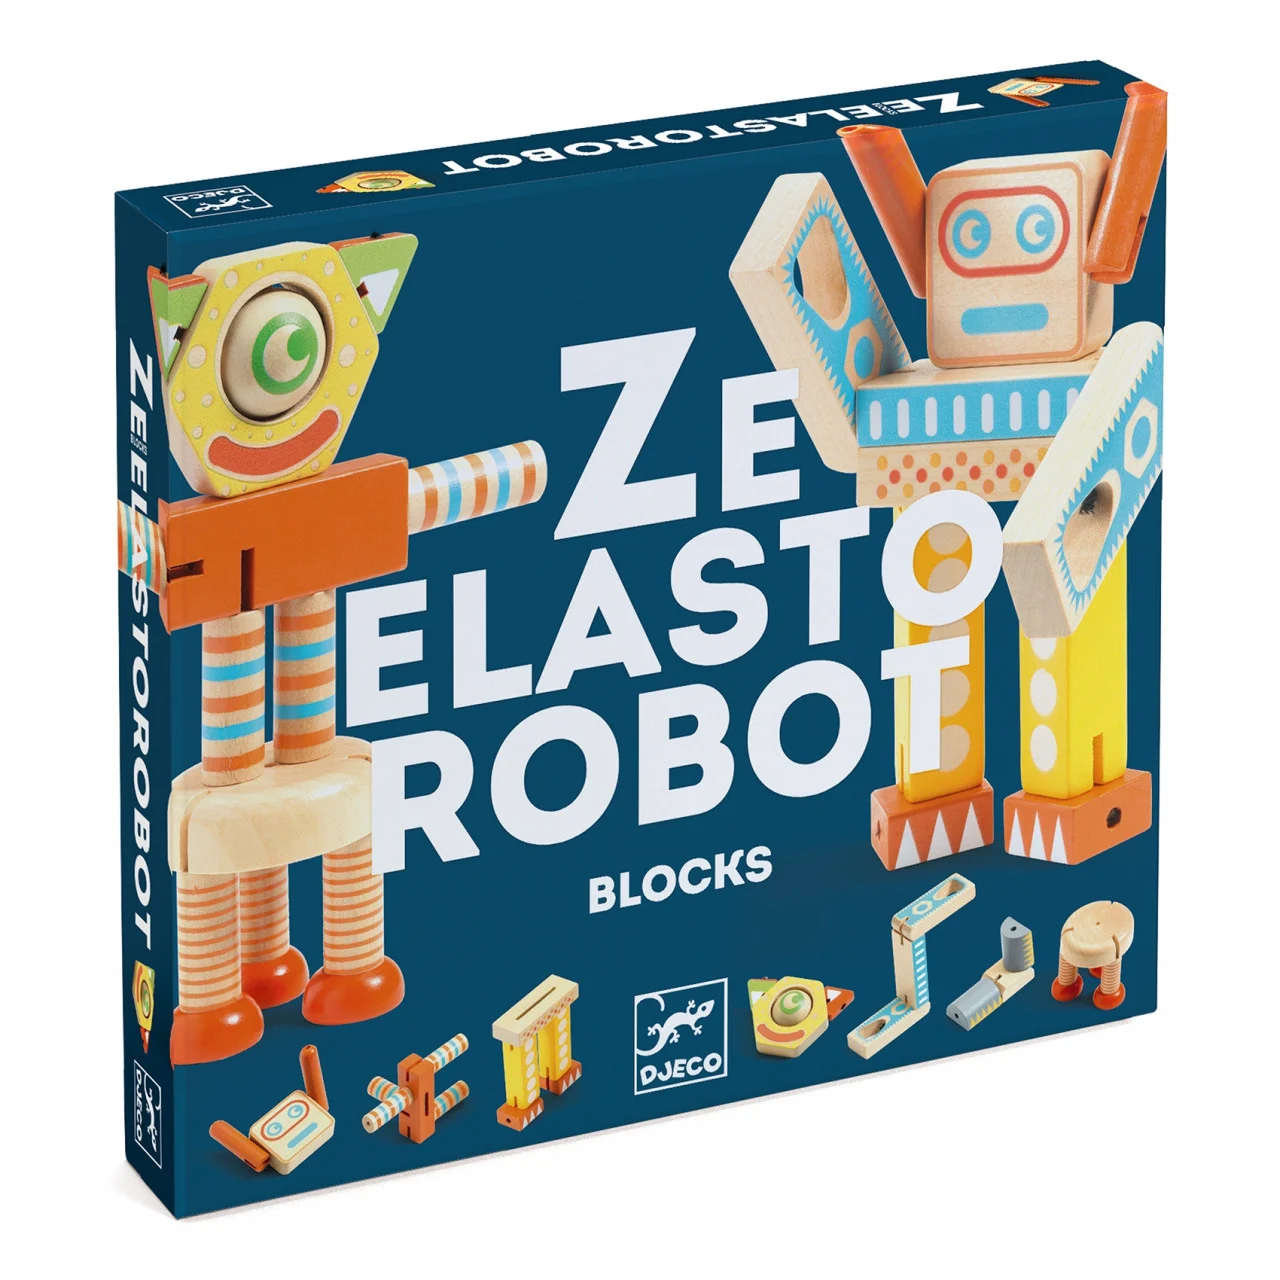 Set de construit Robotul Ze Elastorobot din lemn Djeco